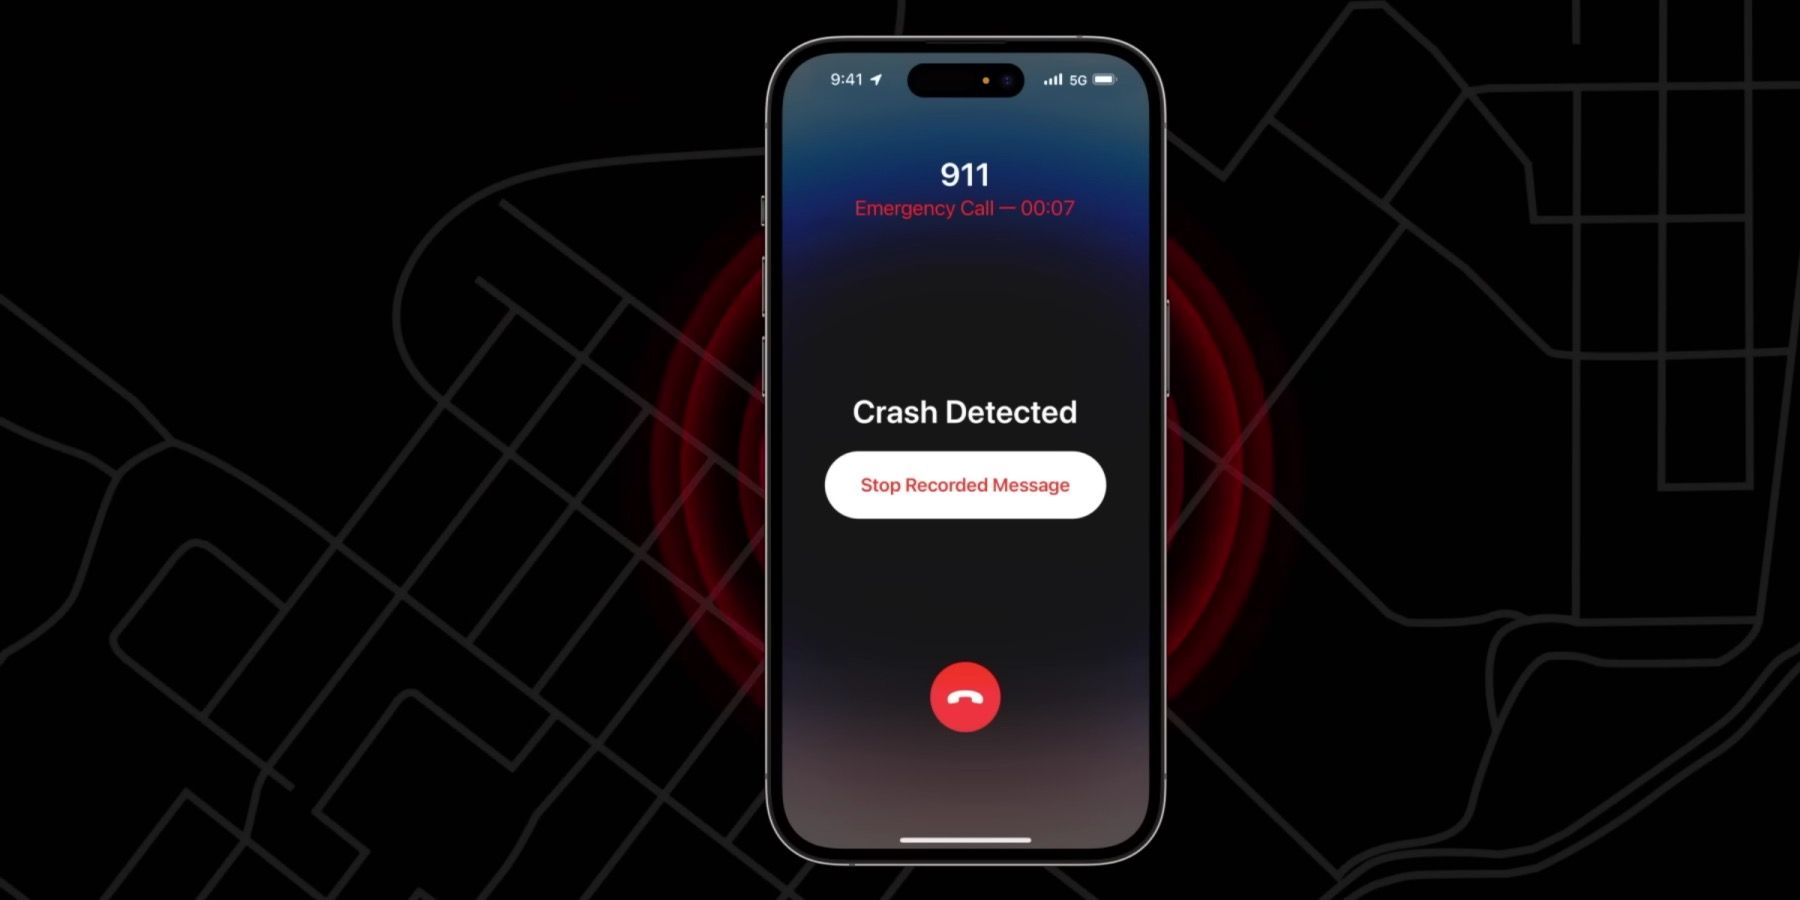 An iPhone calling 911 after detecting a car crash incident 